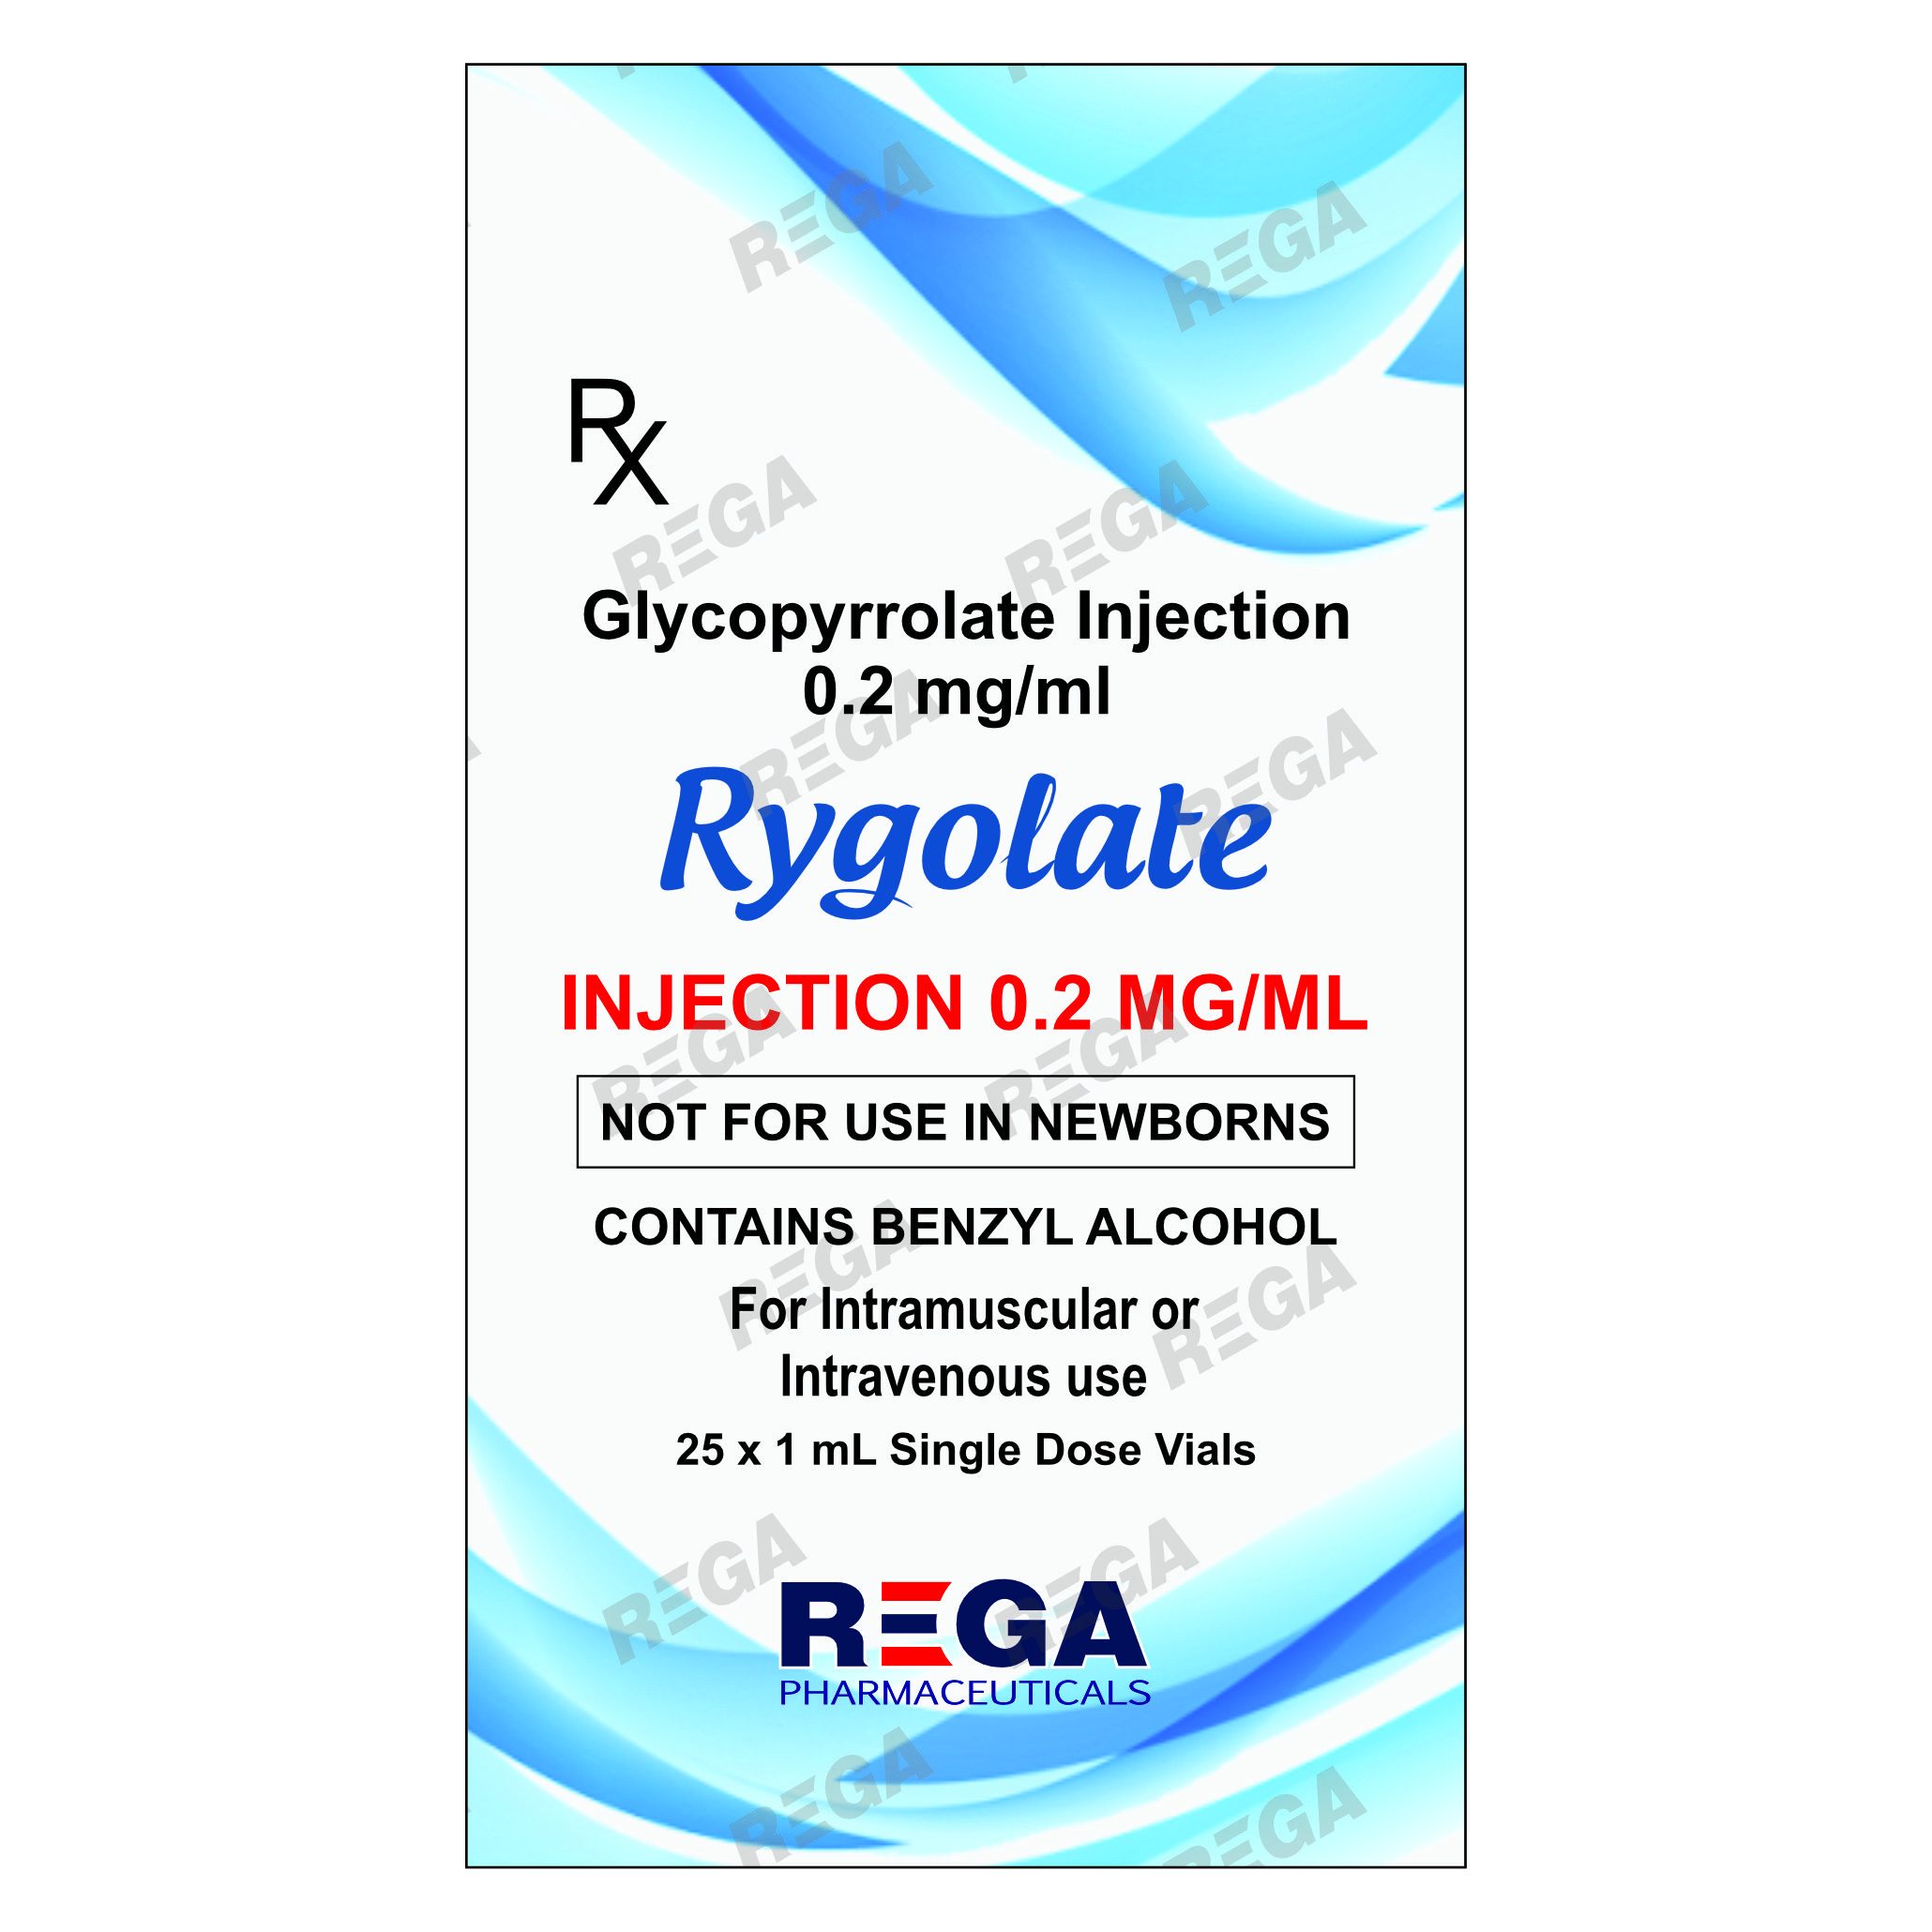 Glycopyrrollate Injection 0.2 mg/ml